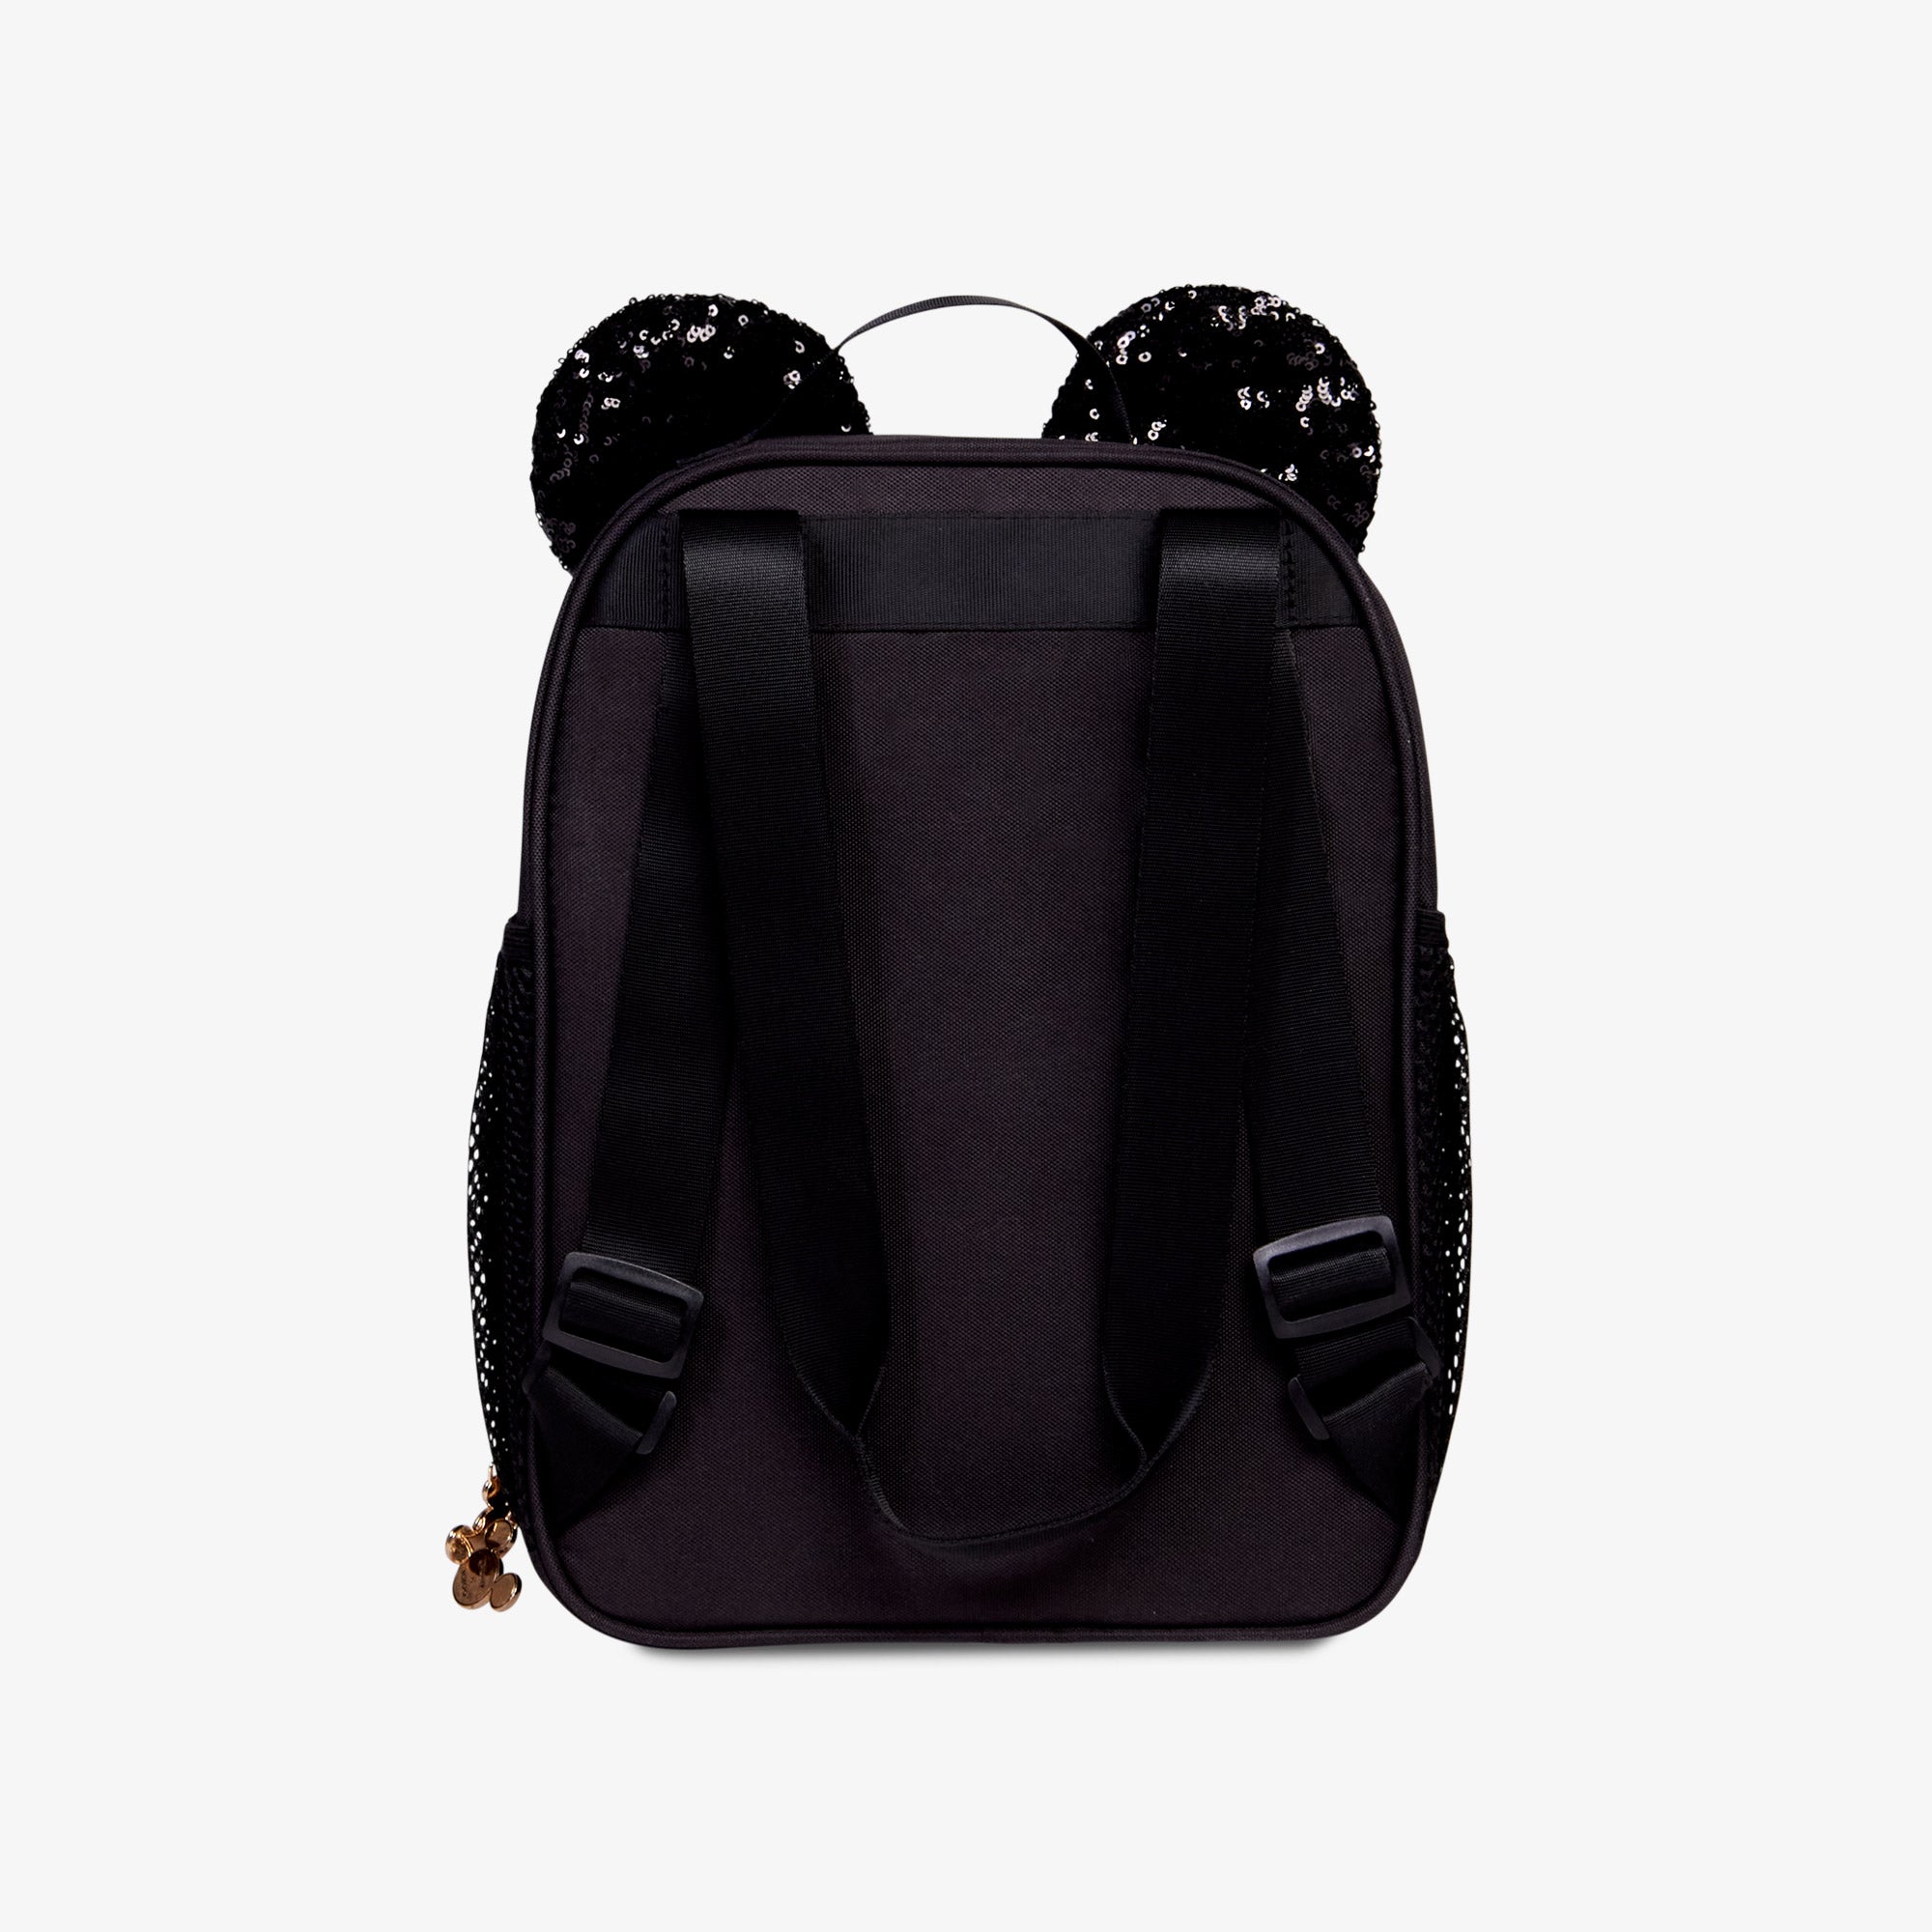 Disney Minnie Mouse Mini Convertible Backpack Cooler | Igloo